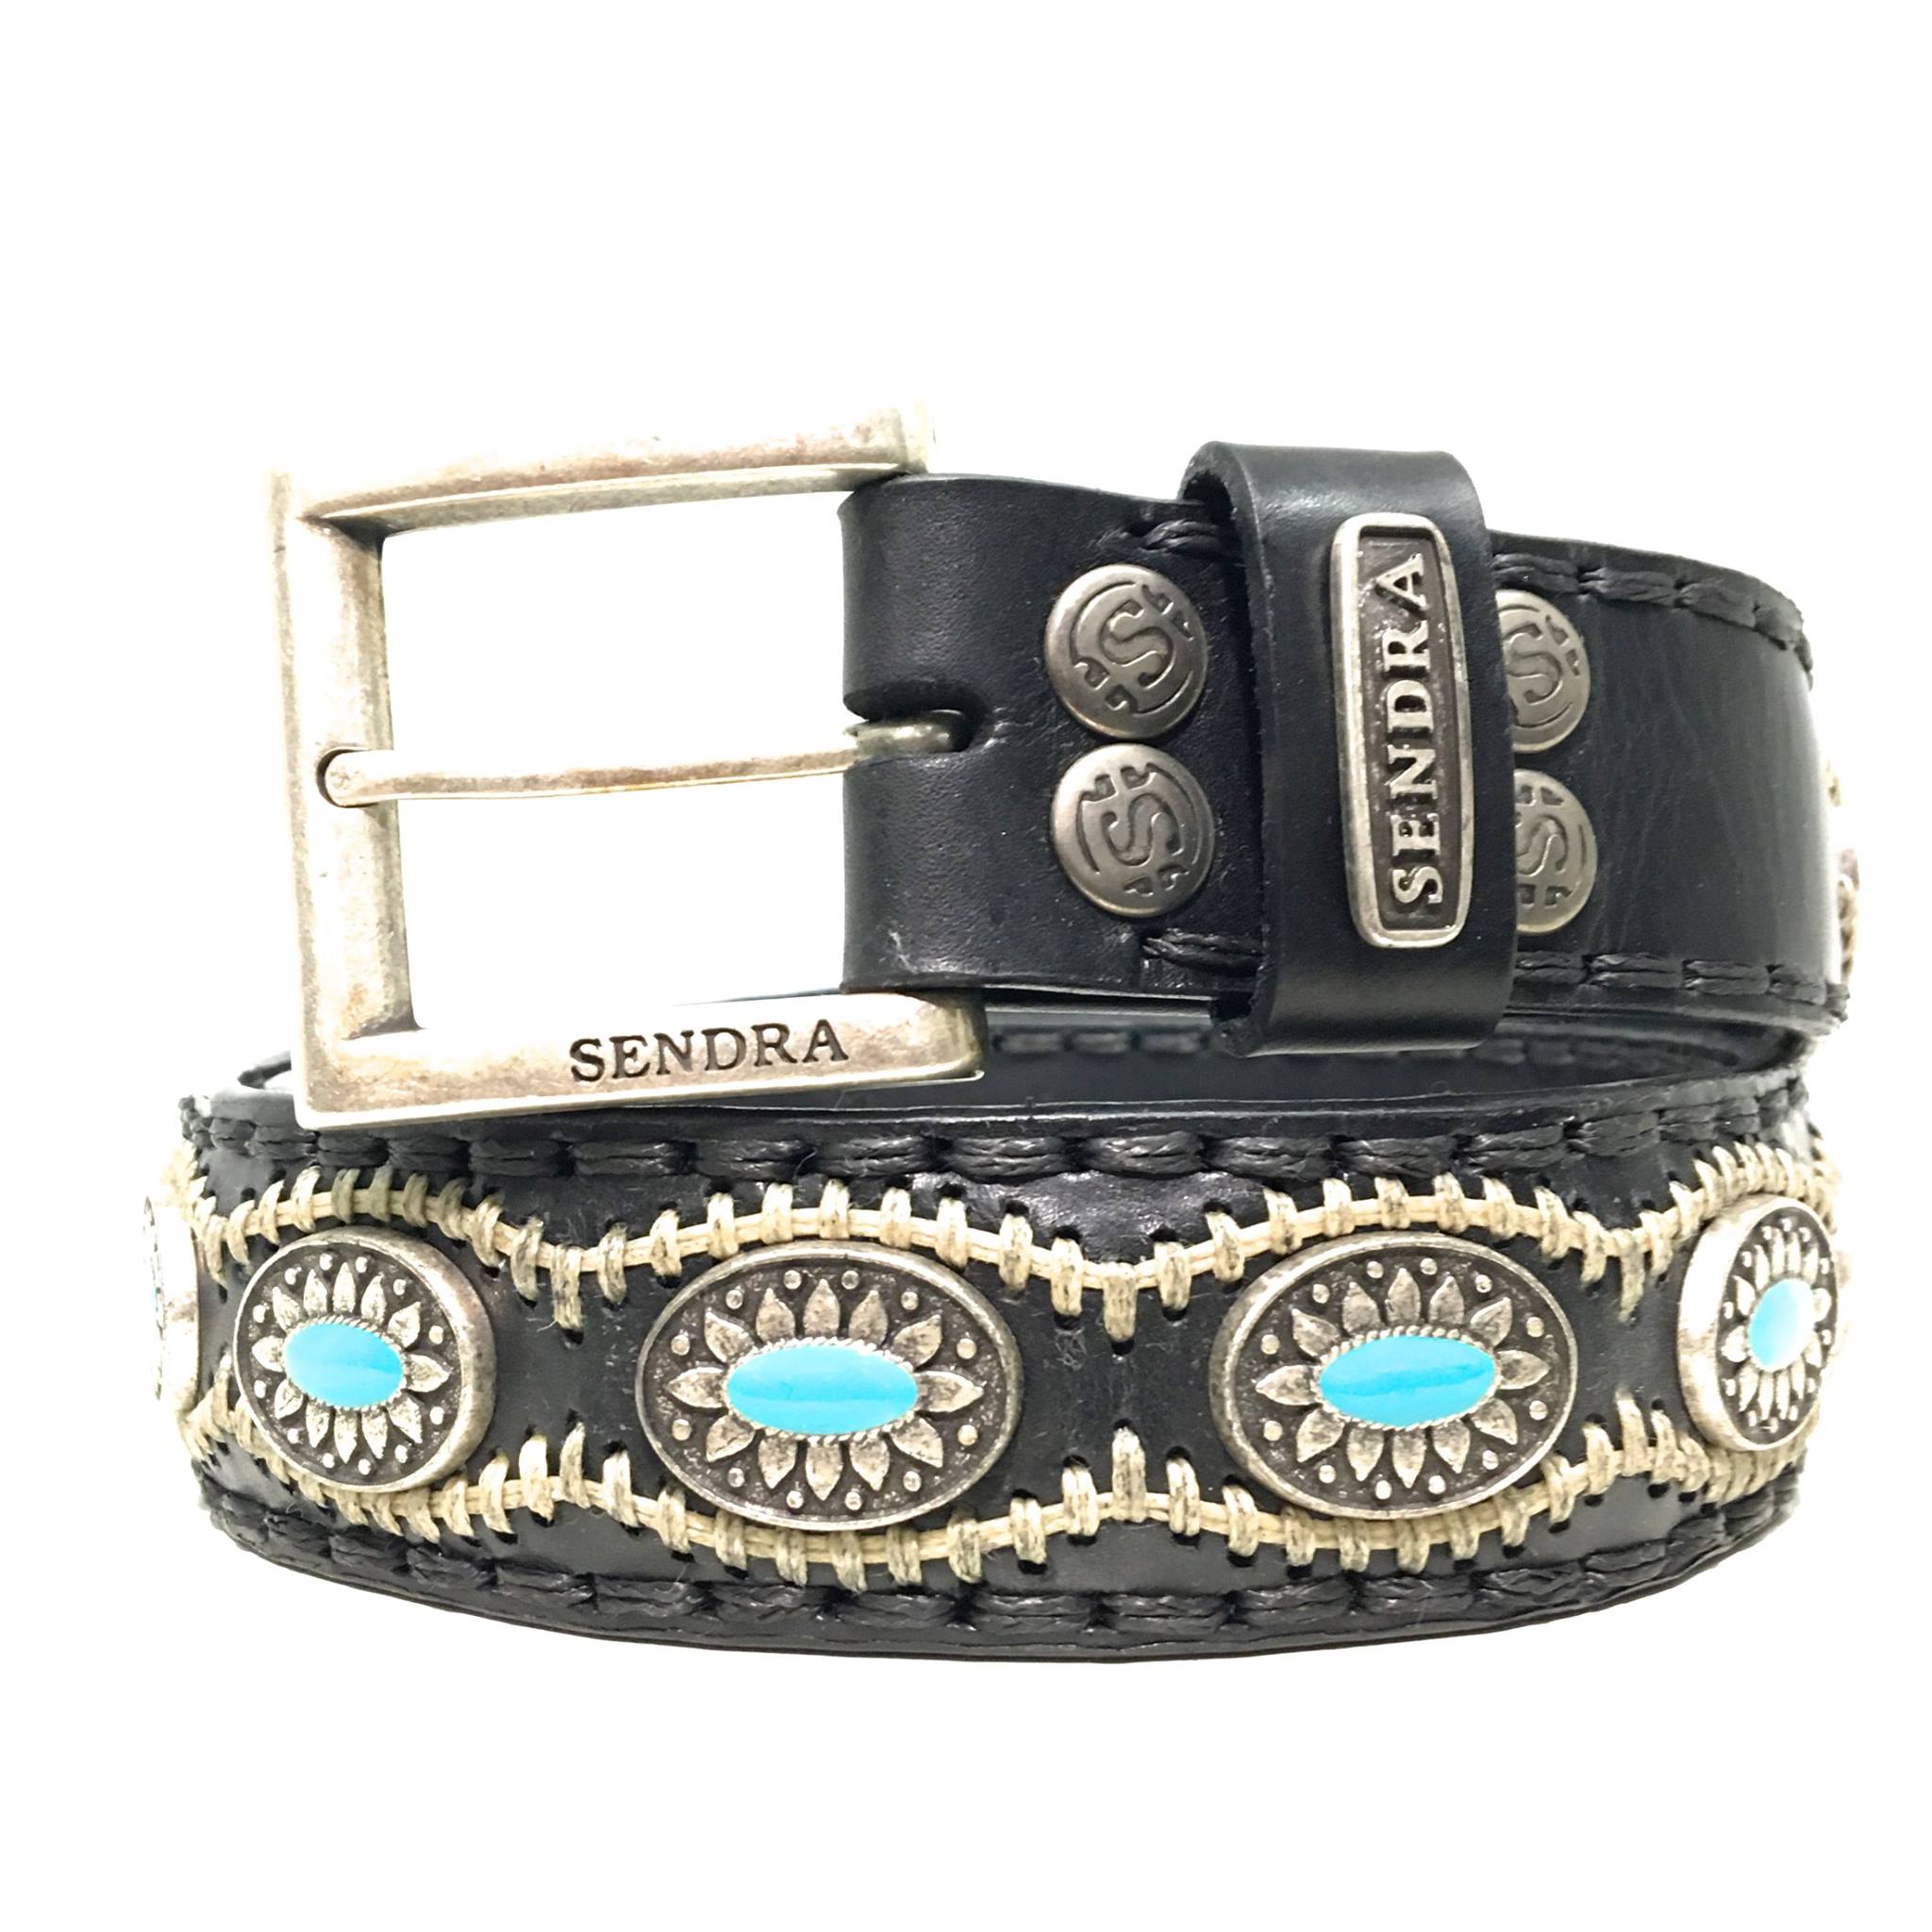 Sendra belt - Turquoise stones black